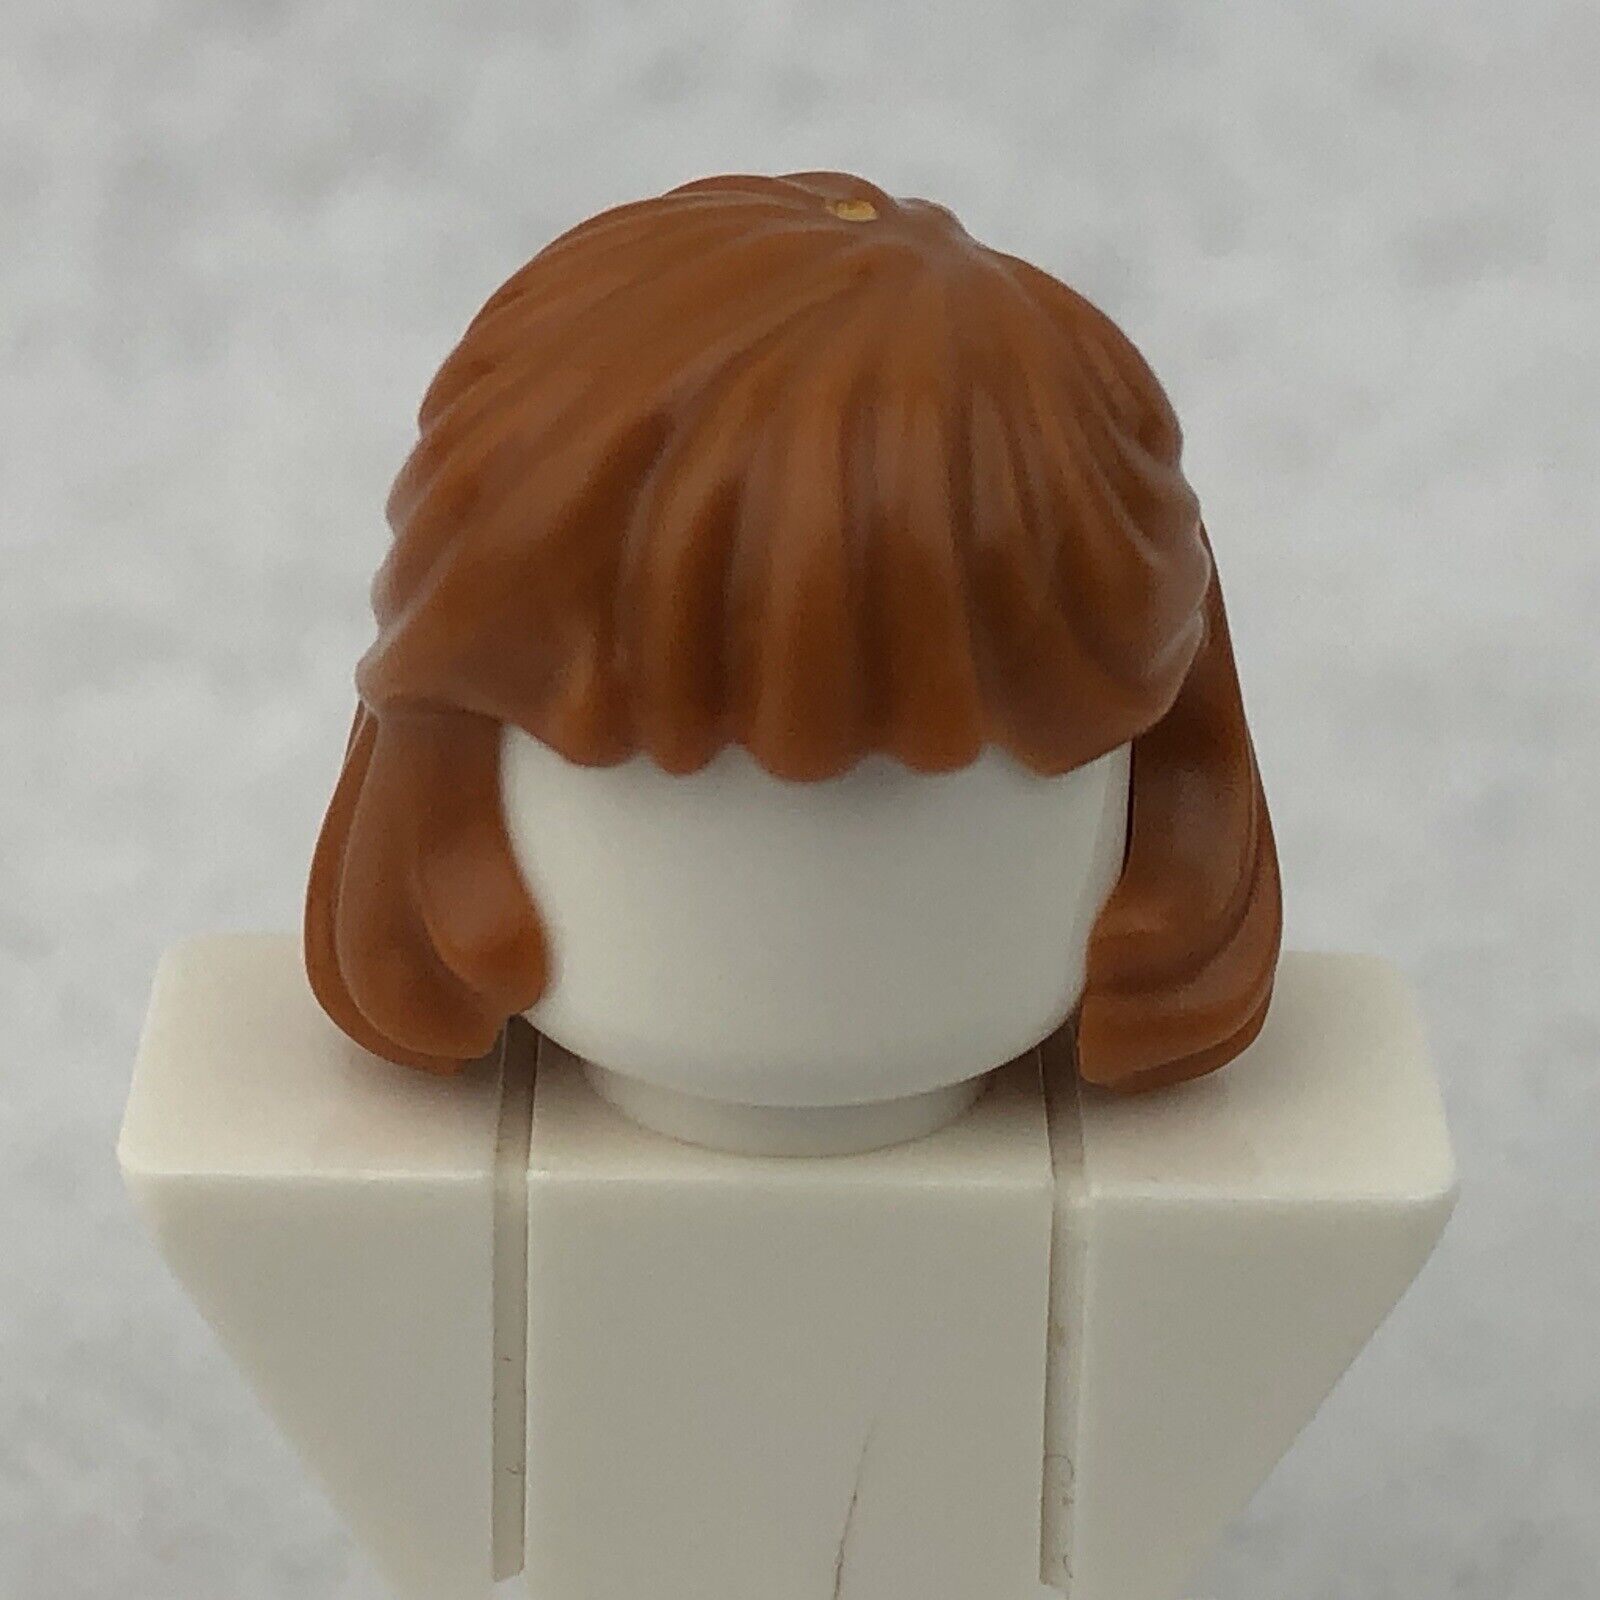 LEGO 36037 Dark Orange Minifigure, Hair Female Mid-Length Combed Behind Ear